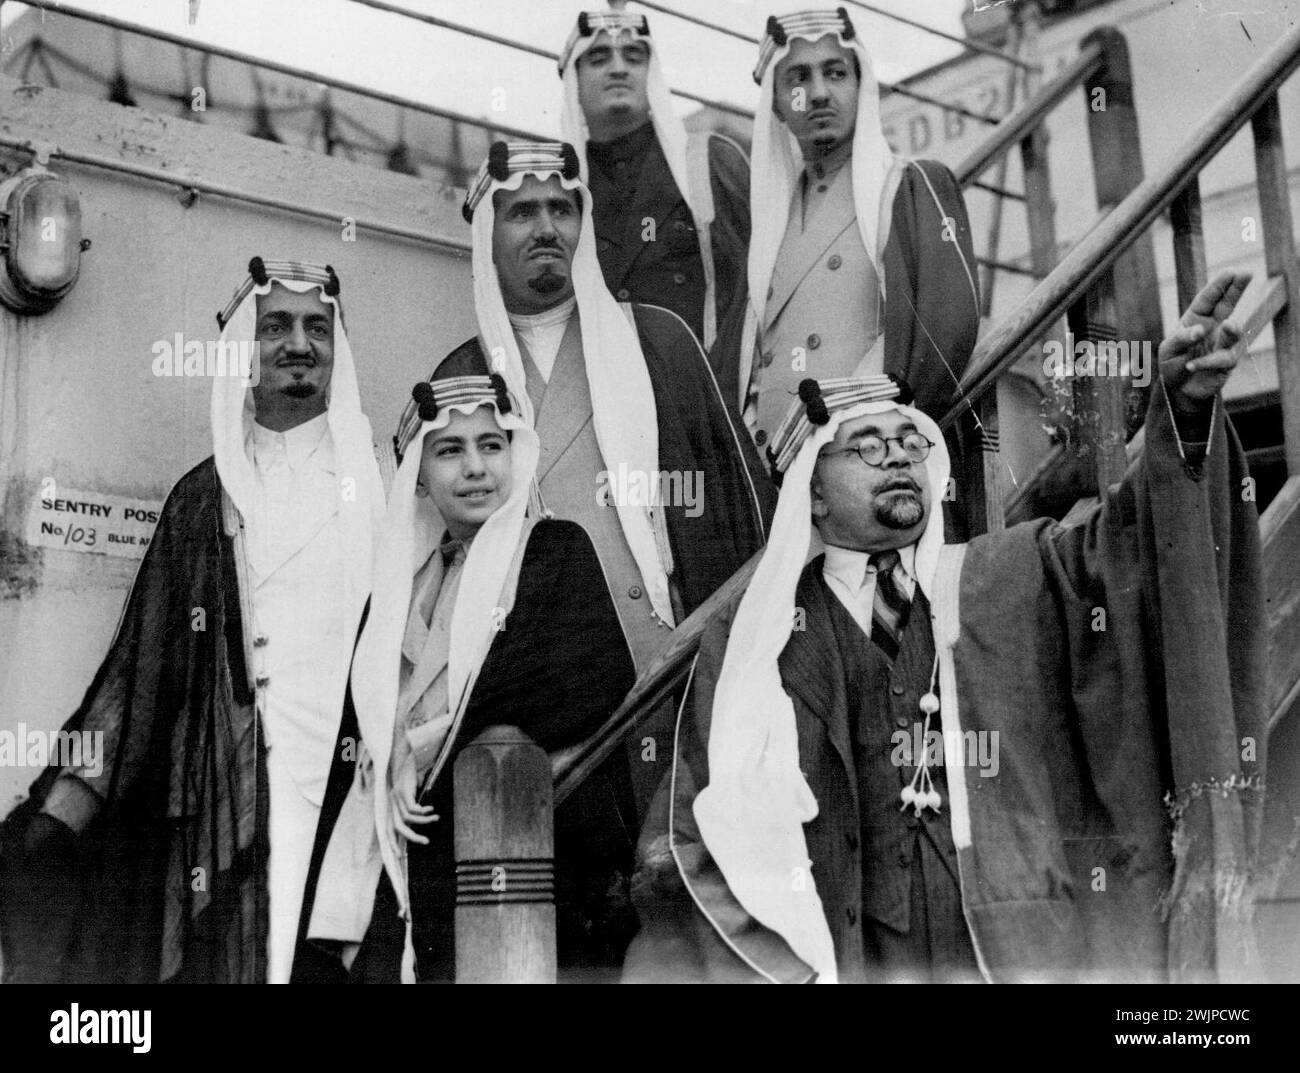 King Faisal Aziz - King of Saudi Arabia - Foreign Royalty. September 10, 1945. Stock Photo